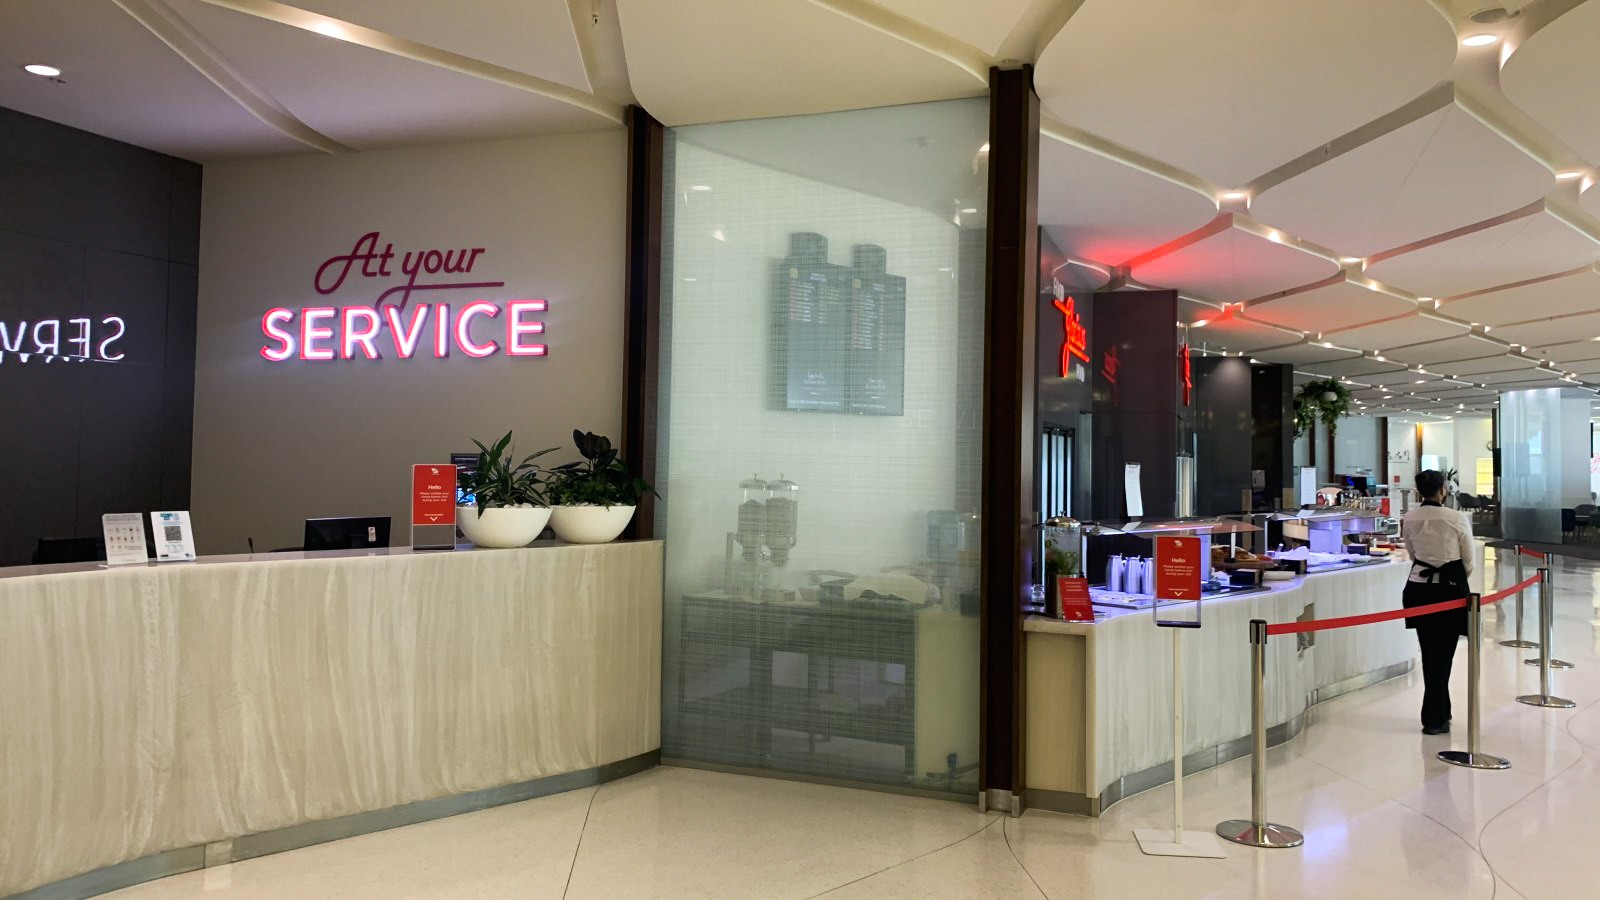 Virgin Australia Lounge At Your Service